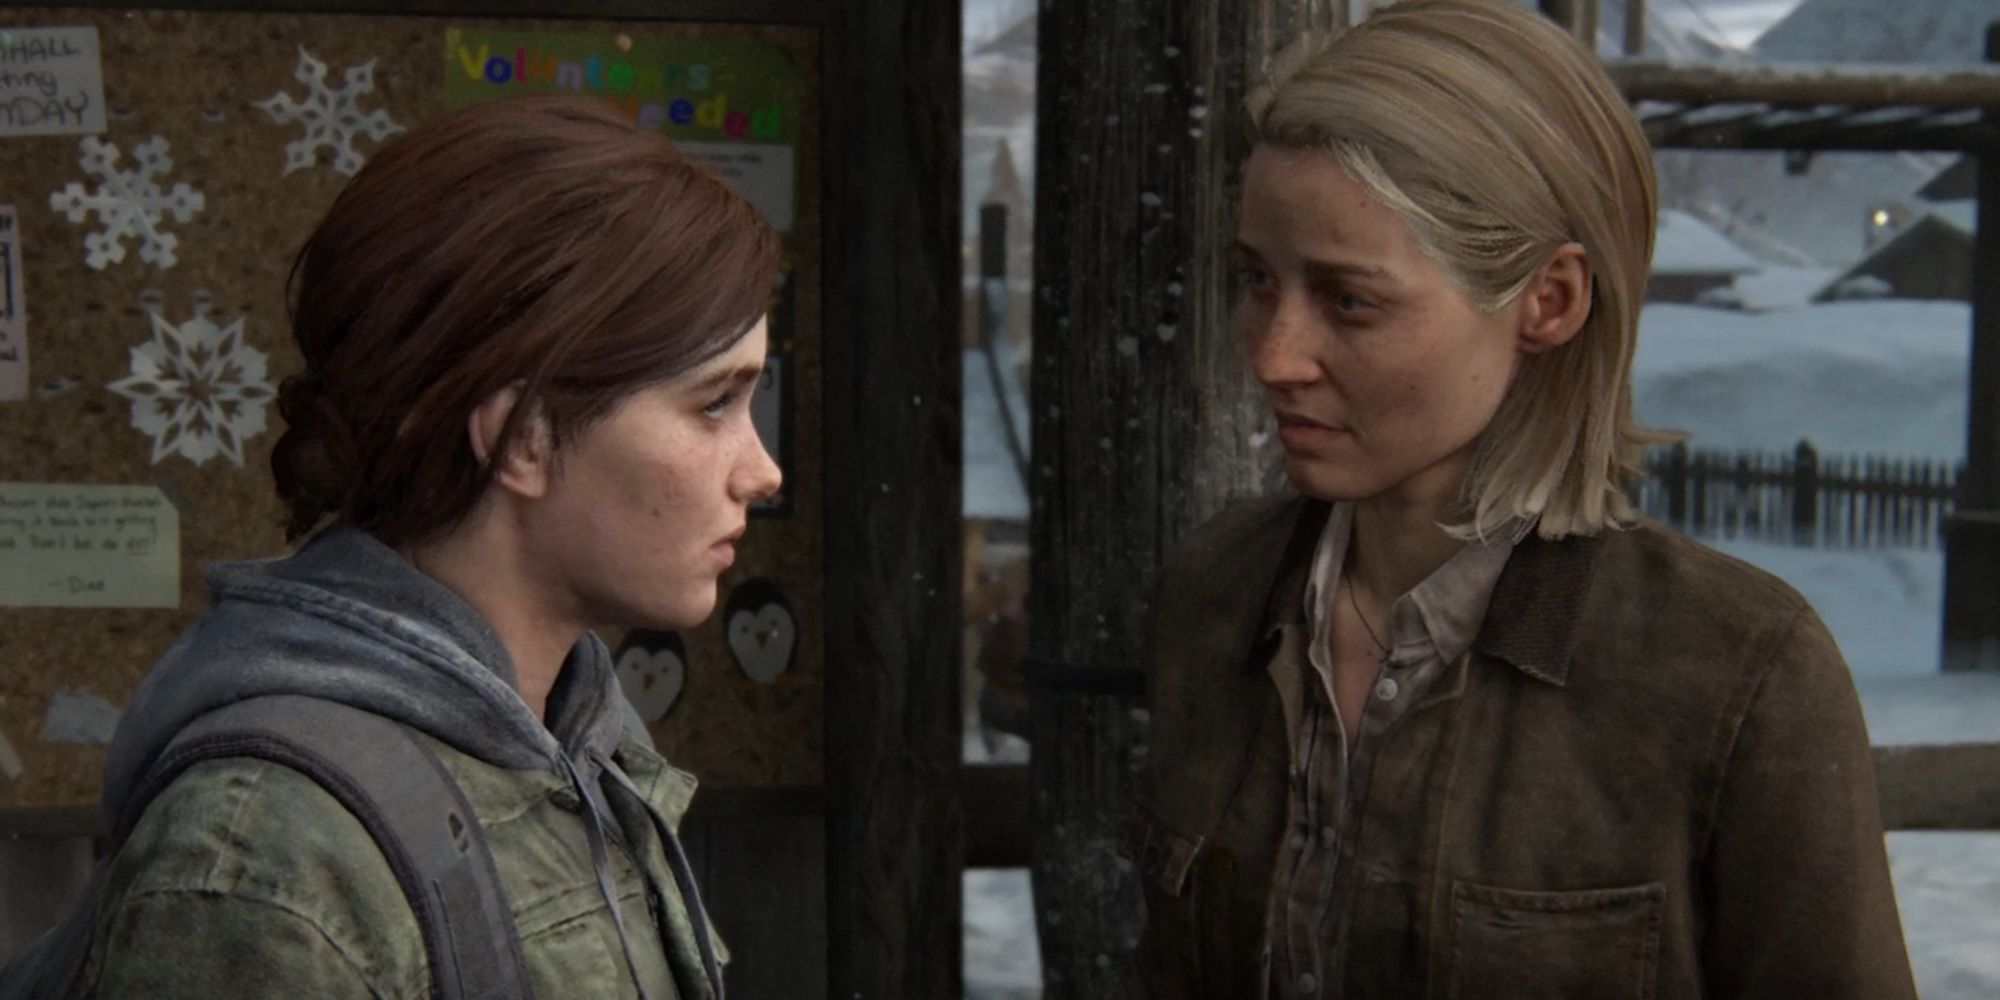 Ellie talks to Maria in The Last of Us Part II